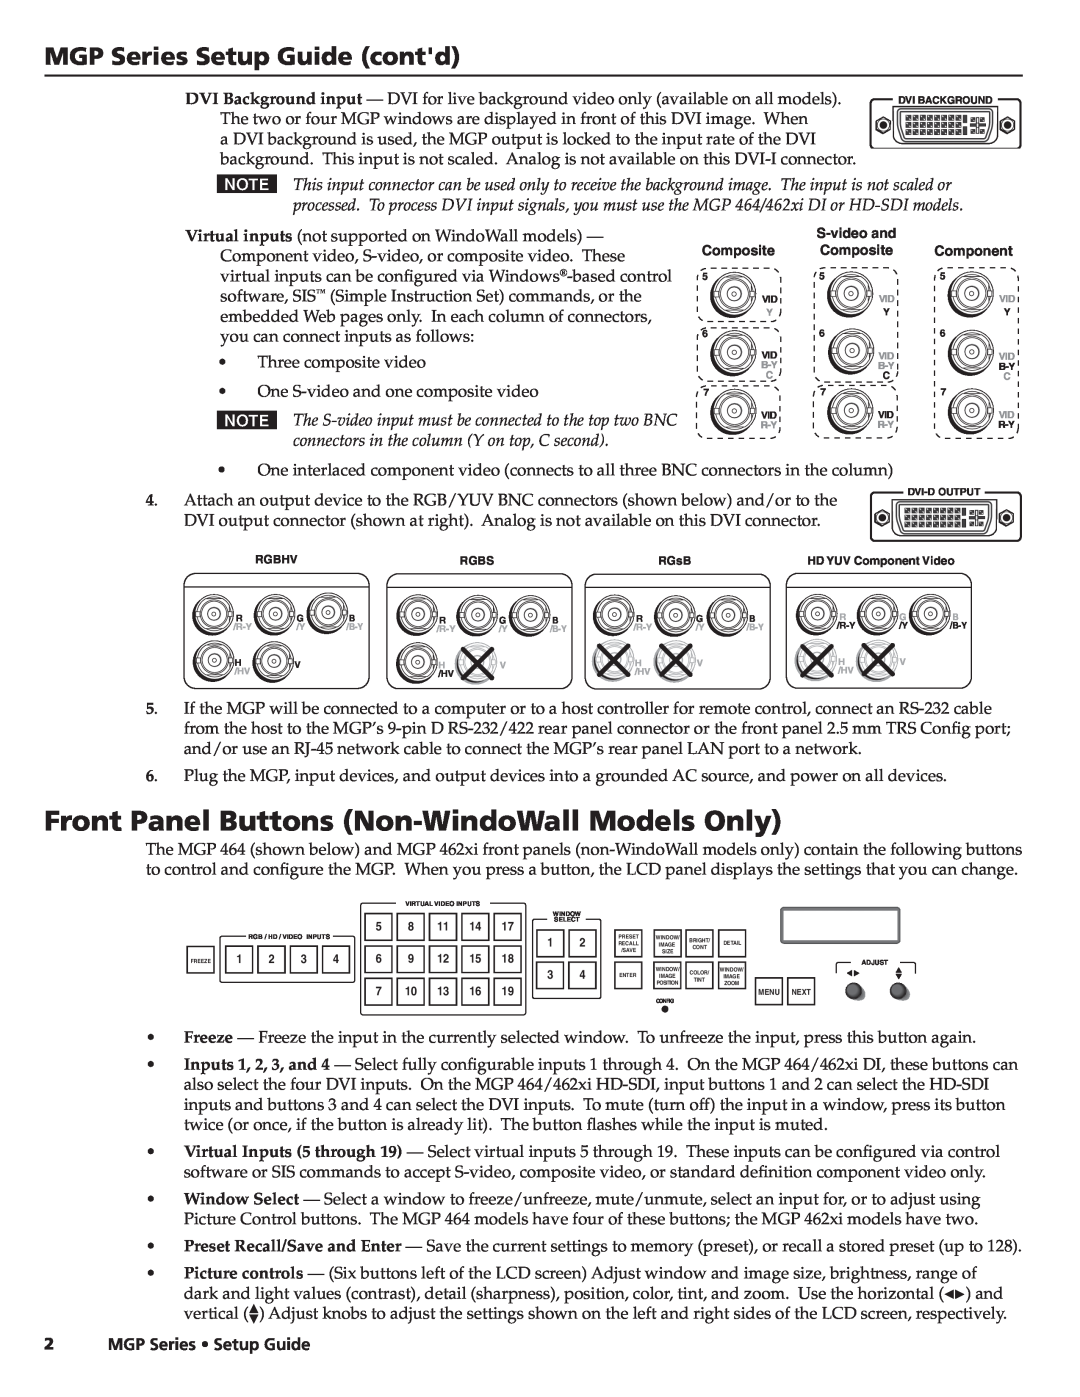 Extron electronic MGP 464 DI, MGP 464 HD-SDI Front Panel Buttons Non-WindoWall Models Only, MGP Series Setup Guide contd 